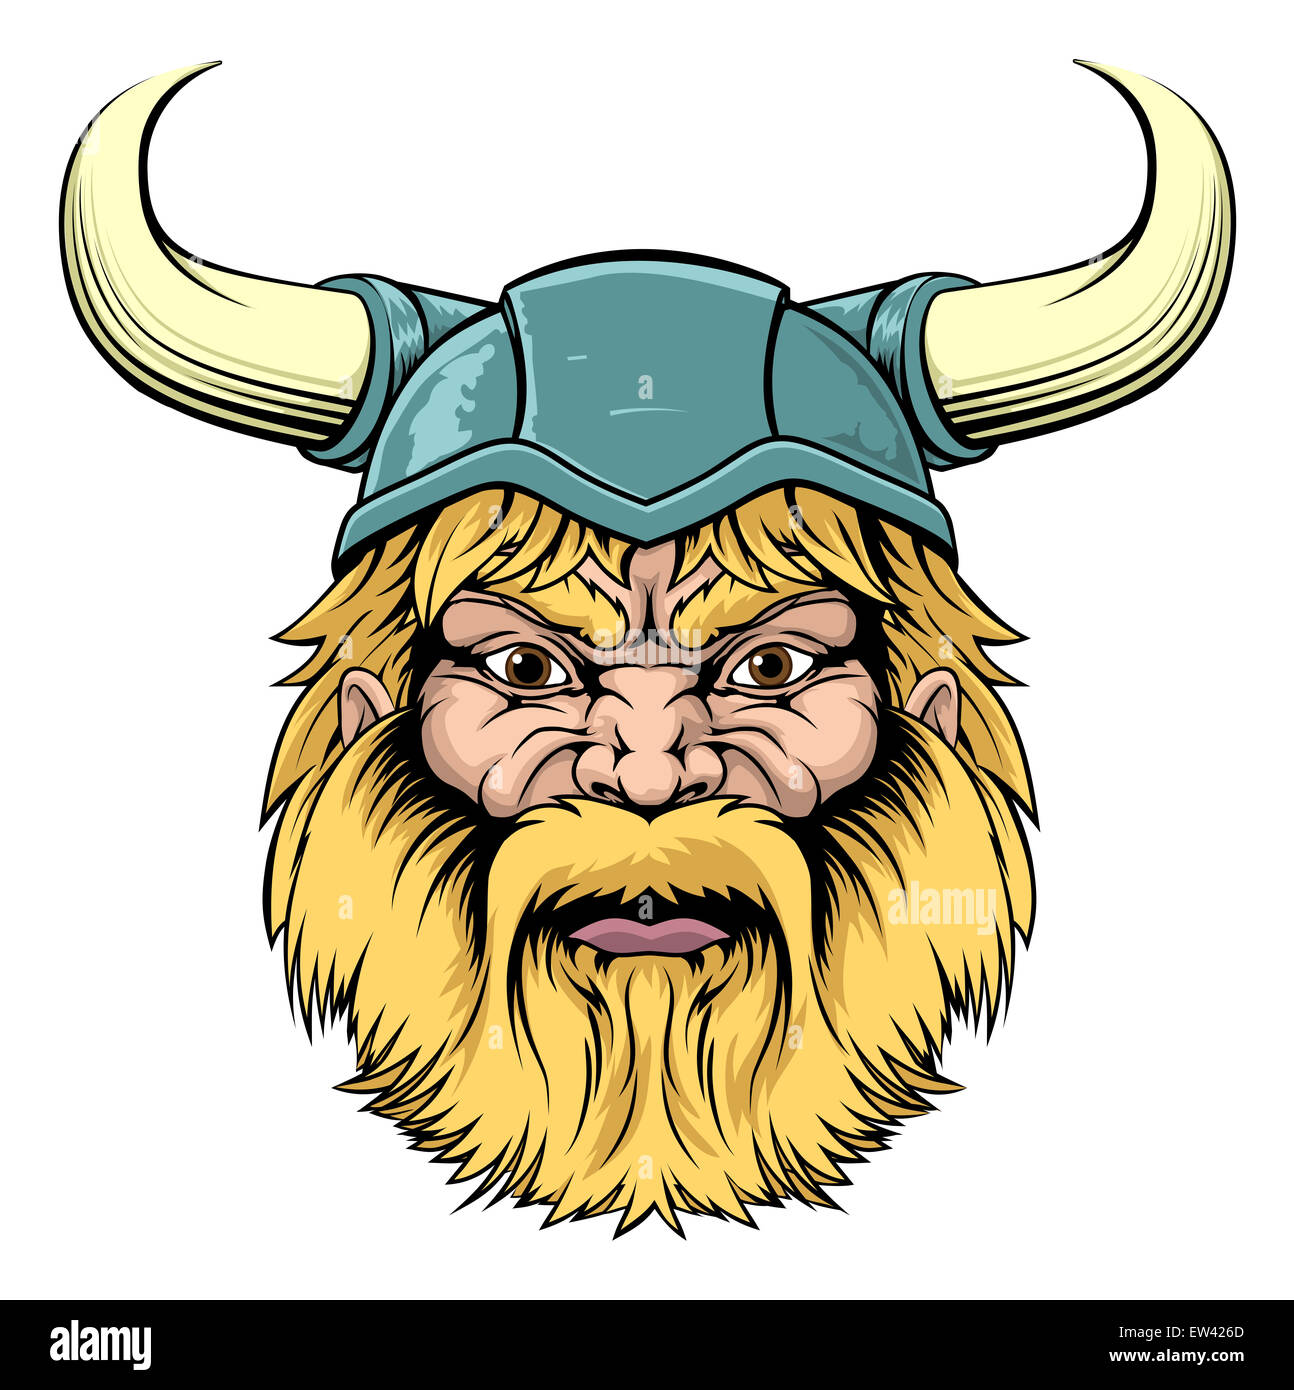 An illustration of a tough looking Viking Warrior mascot Stock Photo